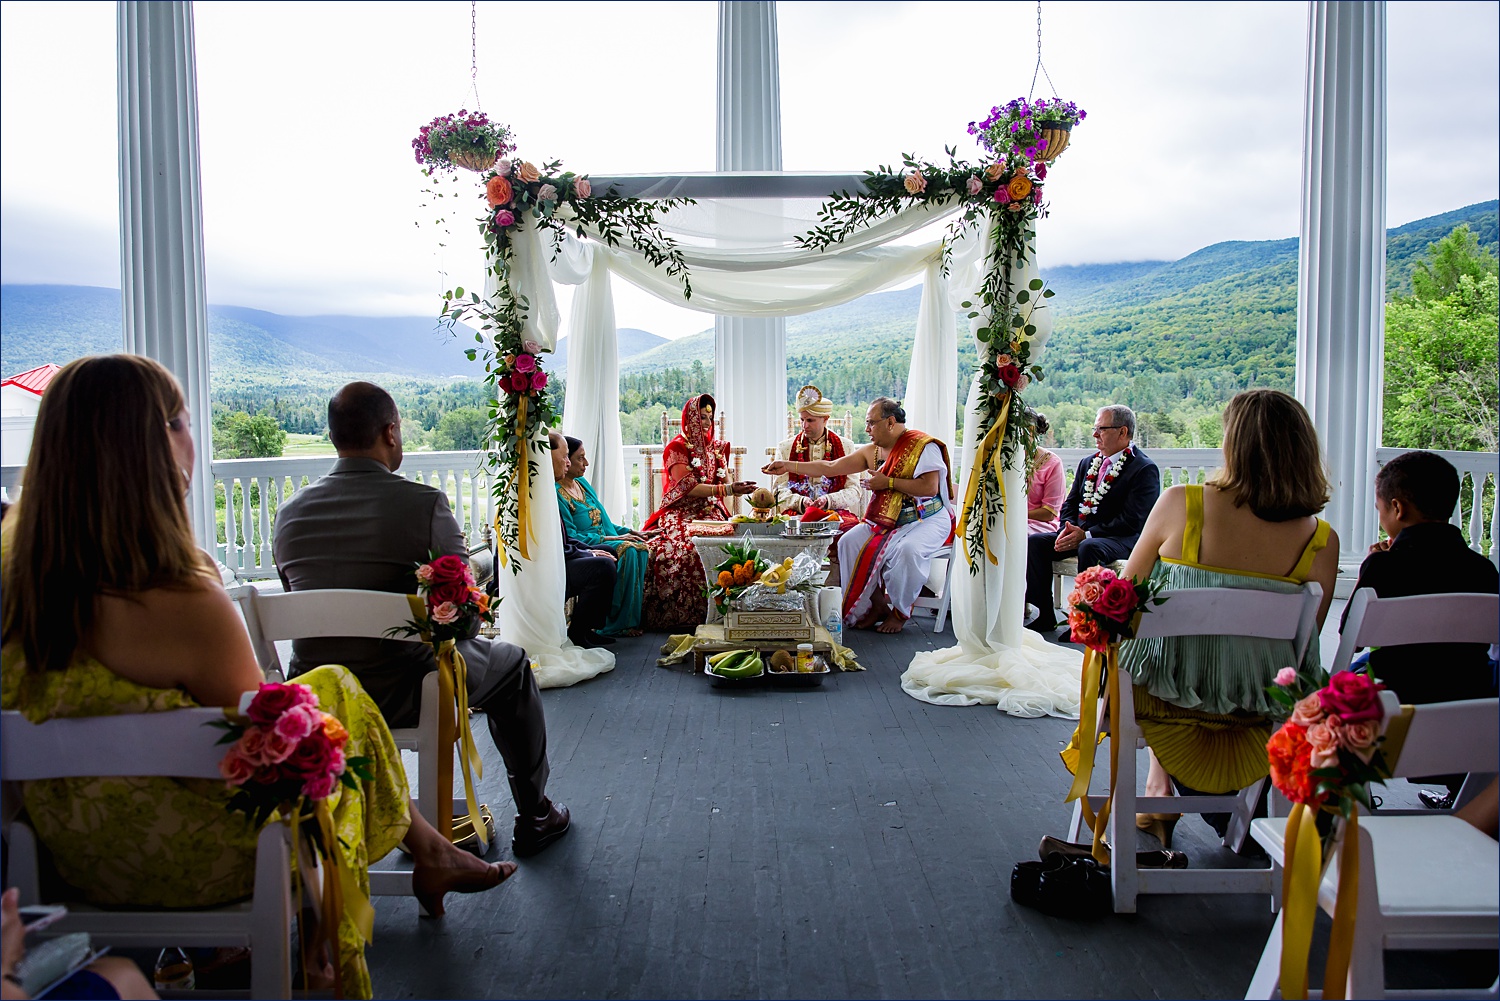 The Hindu wedding ceremony on the veranda at Omni Mount Washington Resort in NH